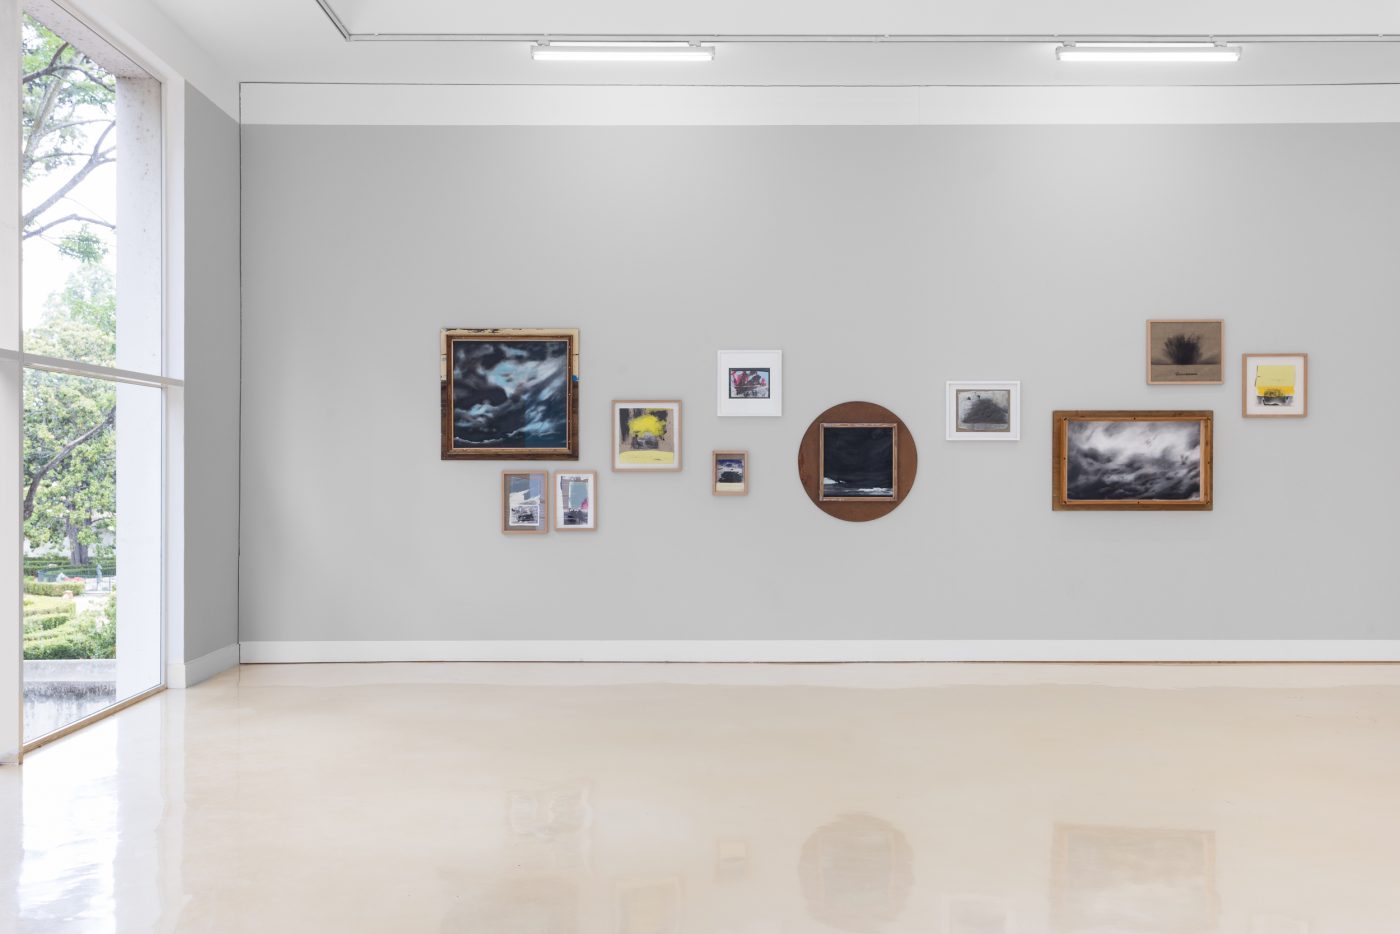 Exhibition view: Ni le Soleil ni la Mort, Pavilhão Branco, Museu da Cidade, Lisbon, 2019
